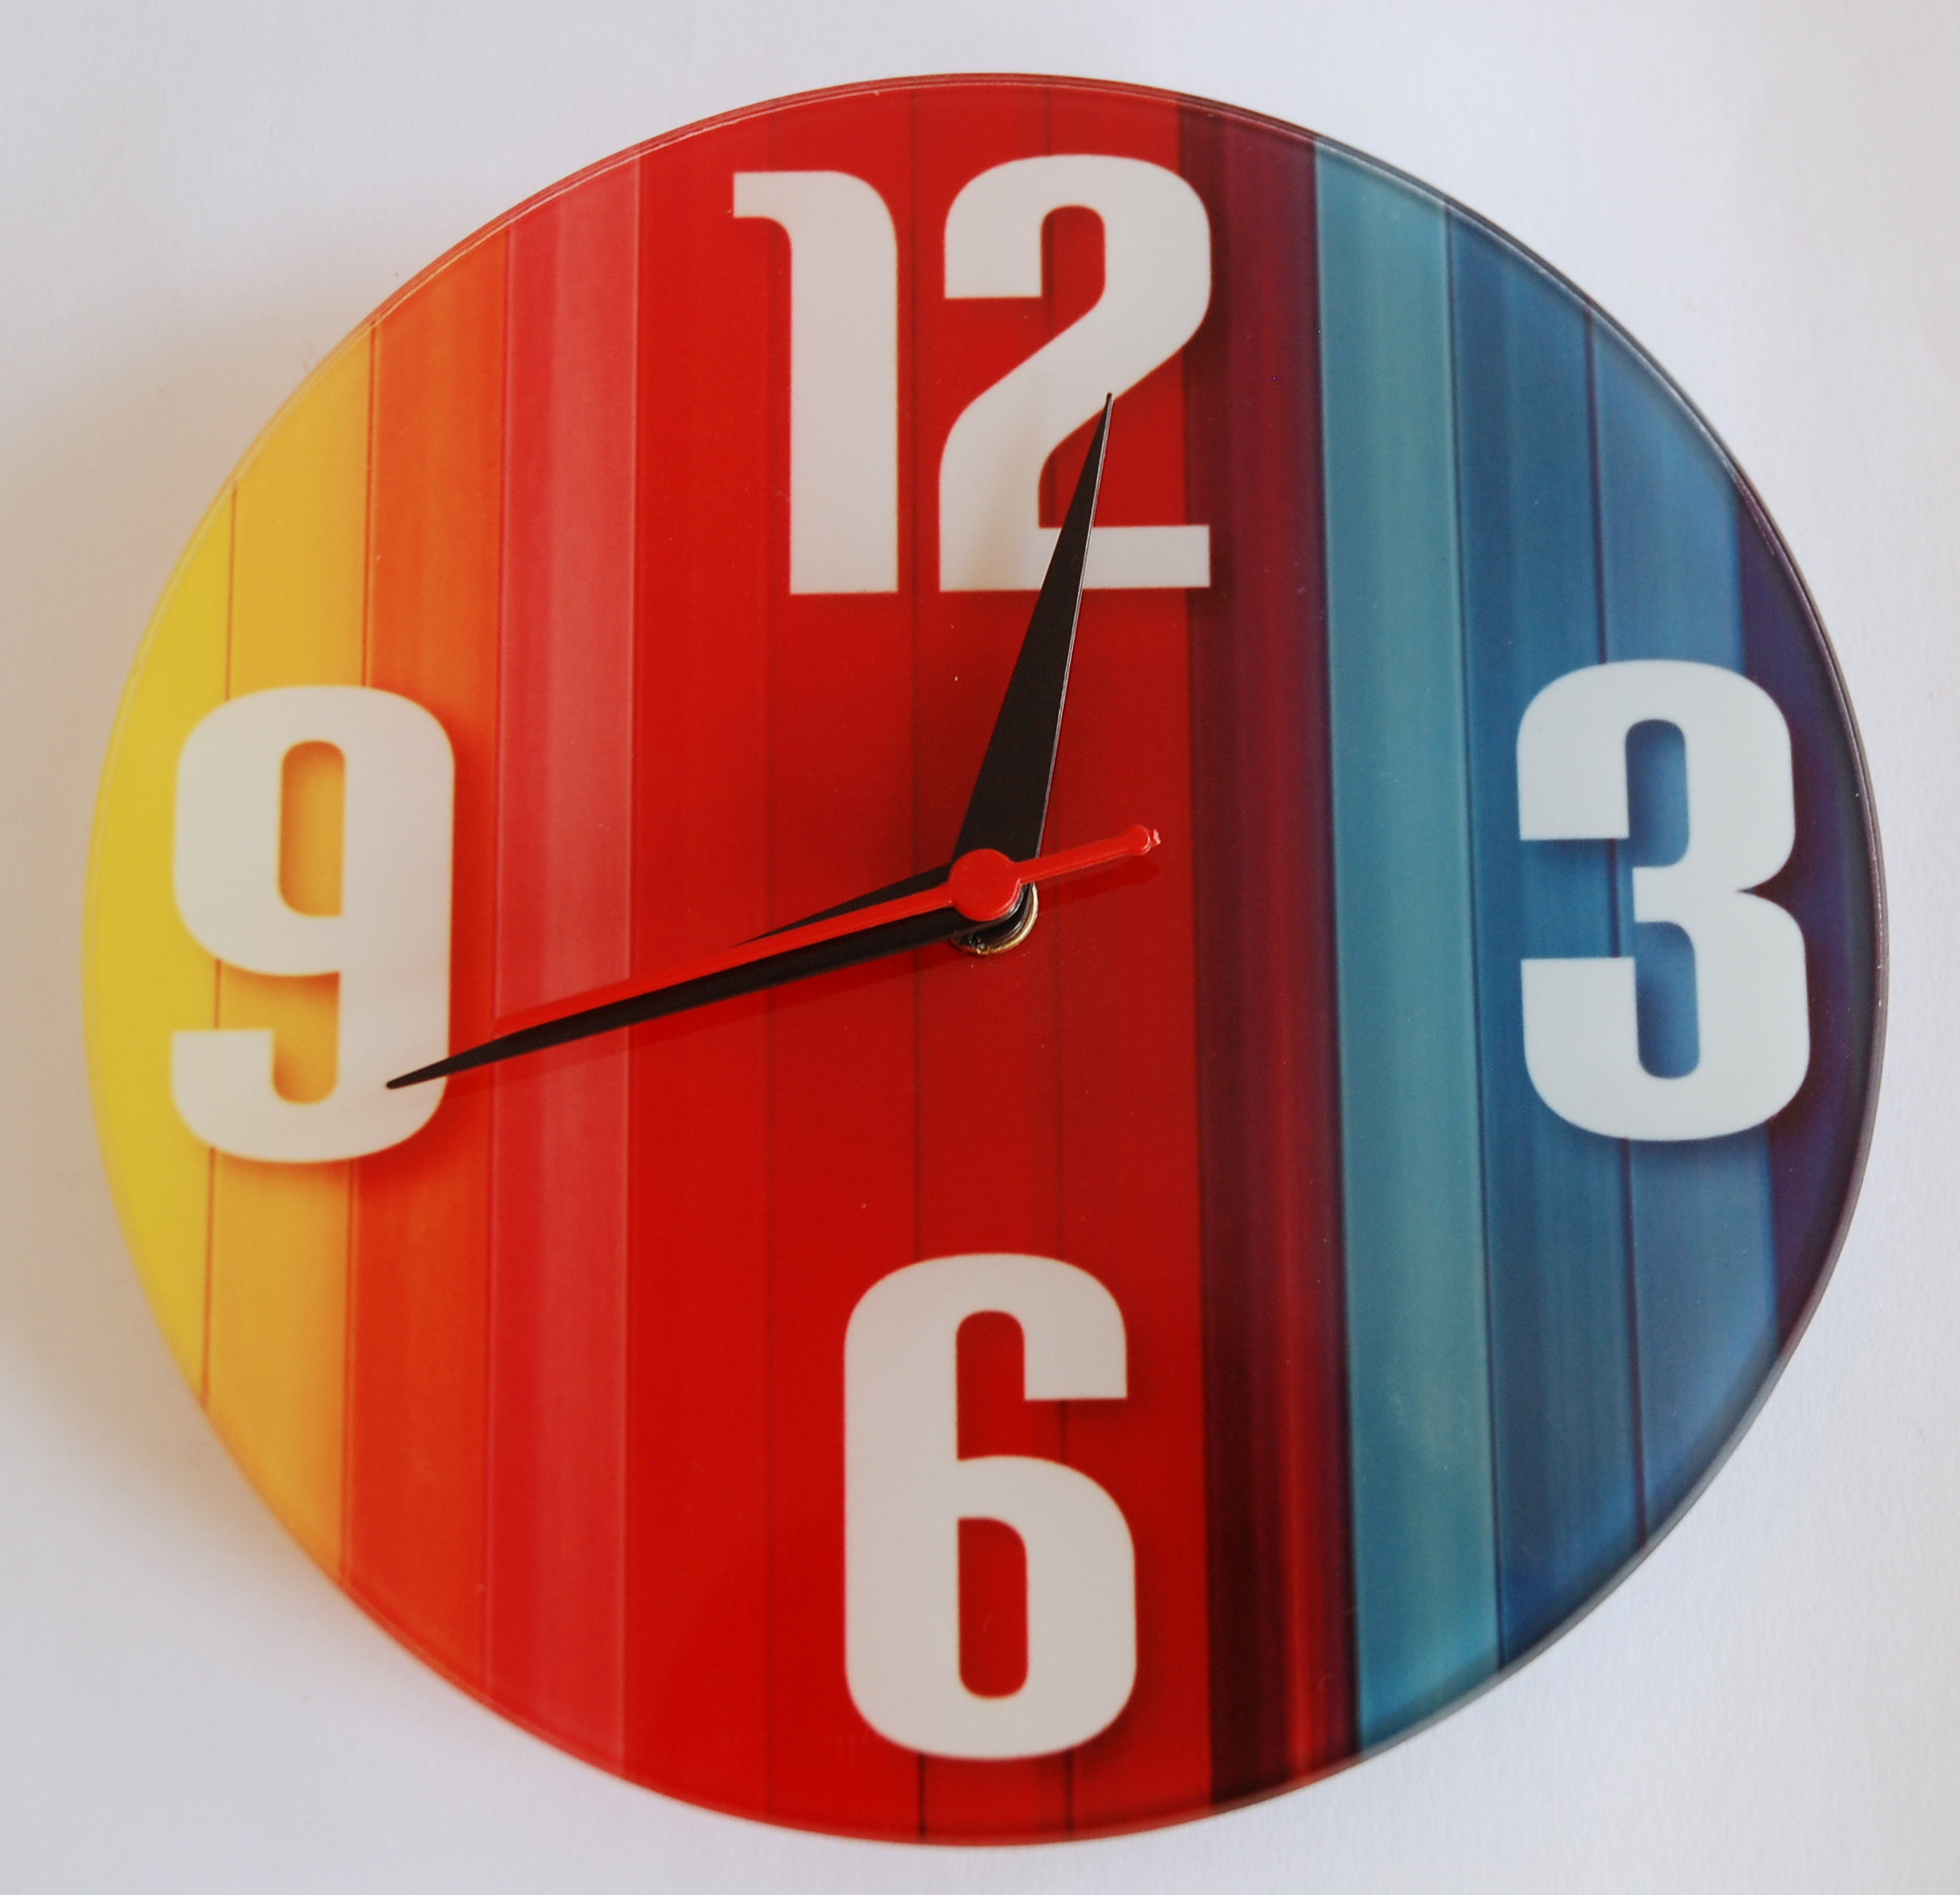 Multi-Coloured Wall Clock